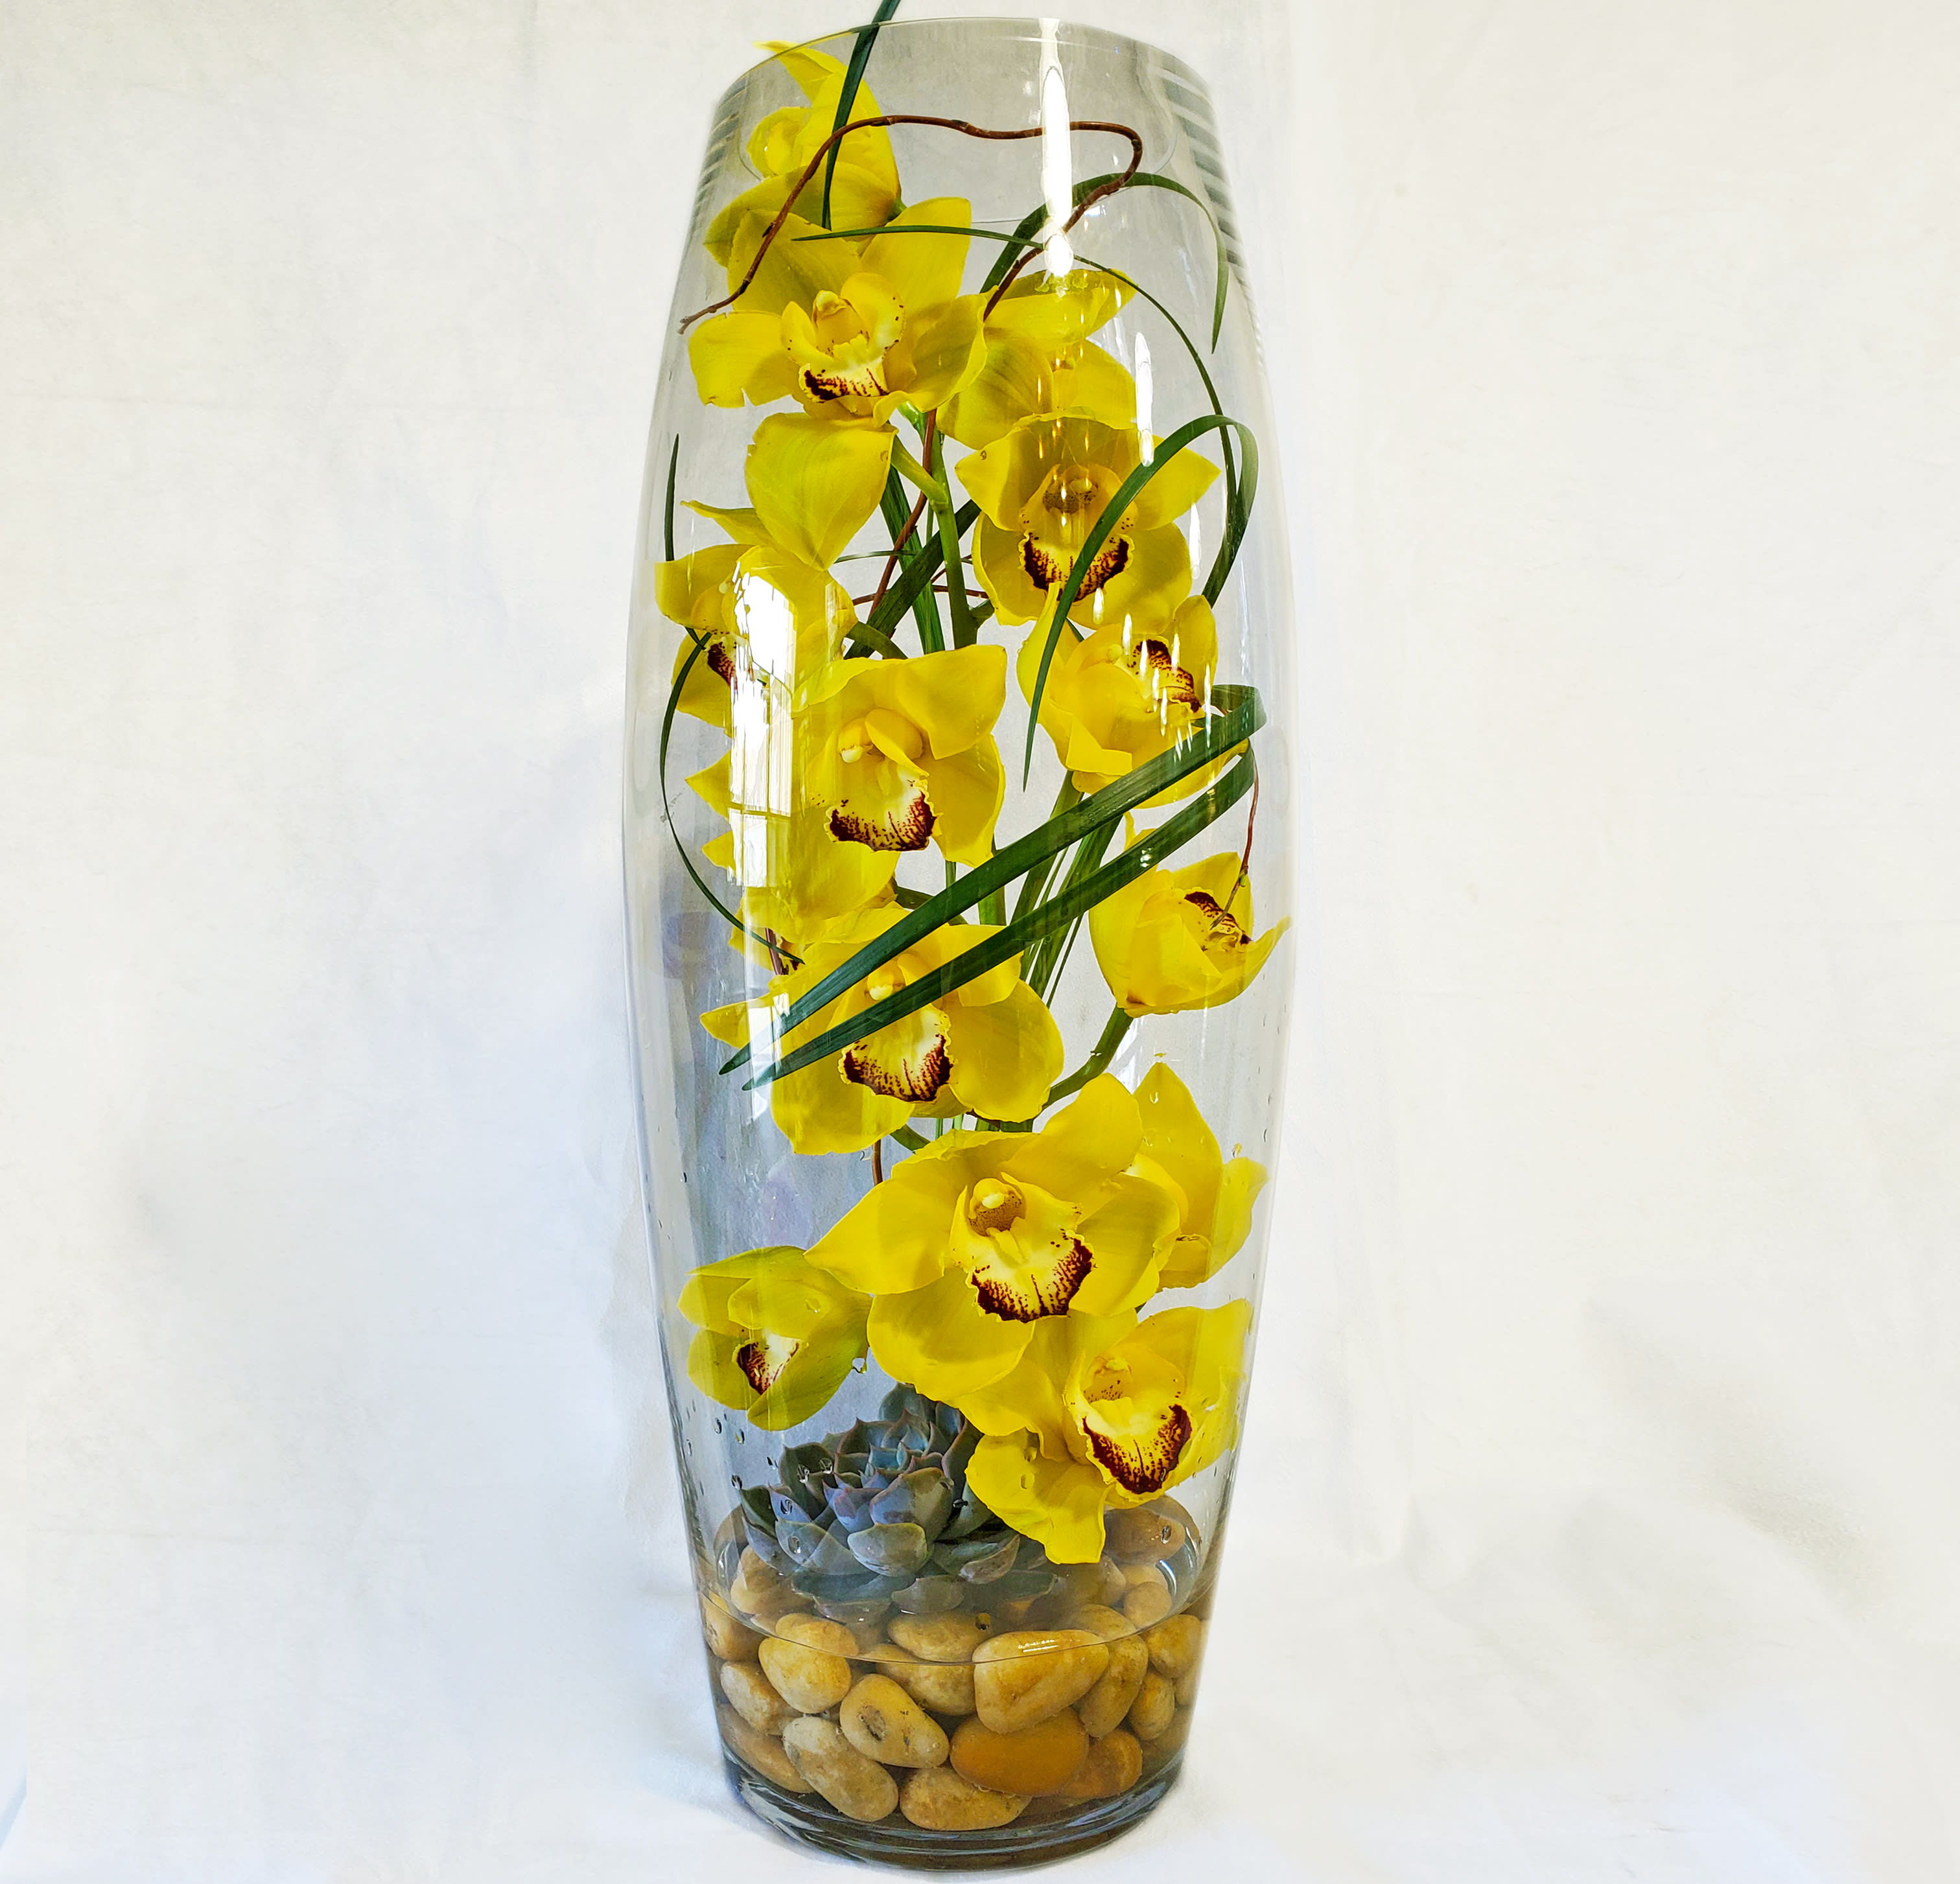 Cymbidium Orchid In A Glass Vase In Long Island City Ny Fellan Florist